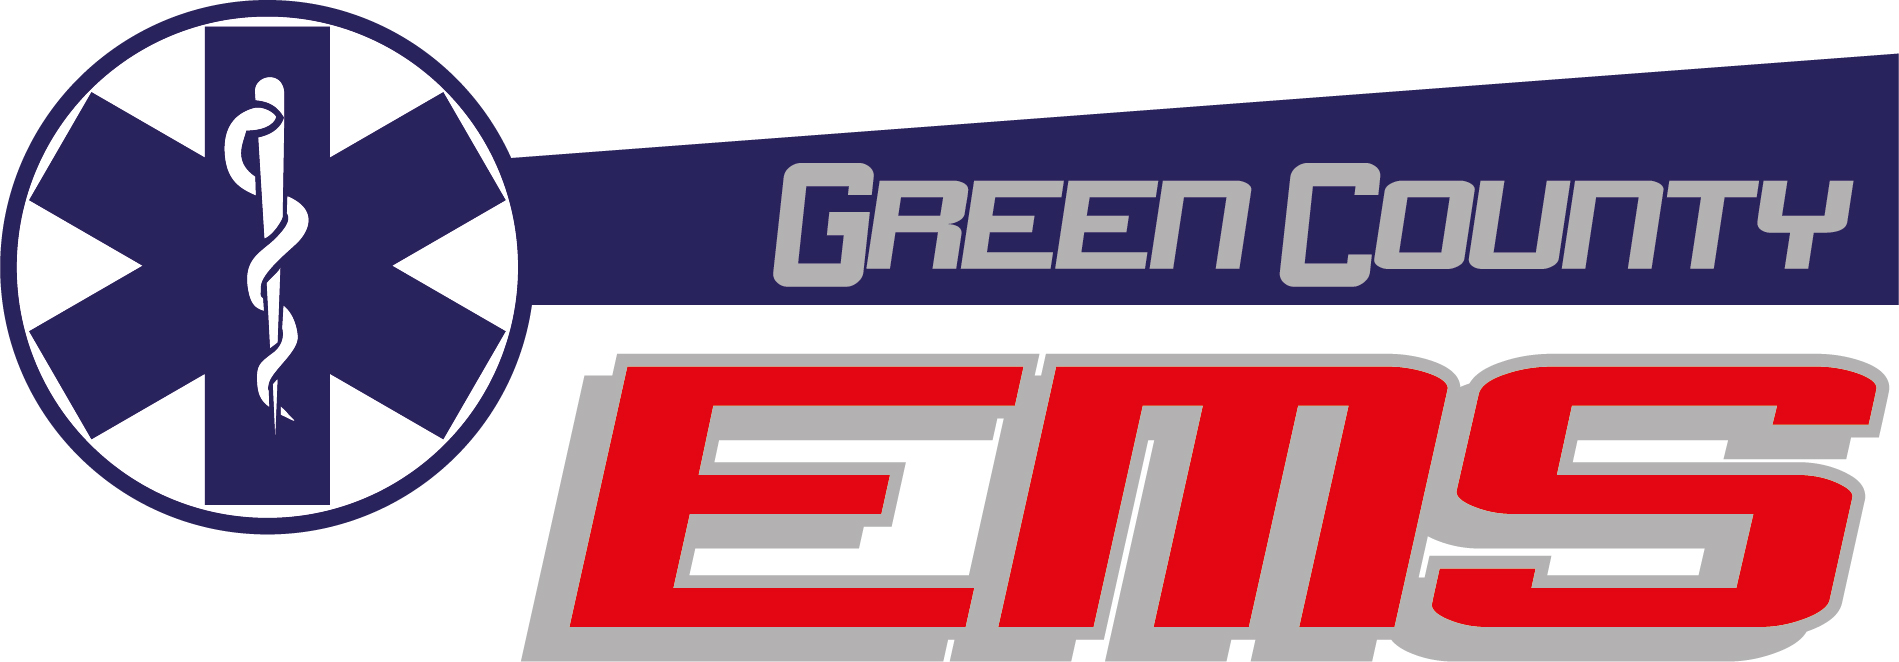 Green County EMS logo.jpg